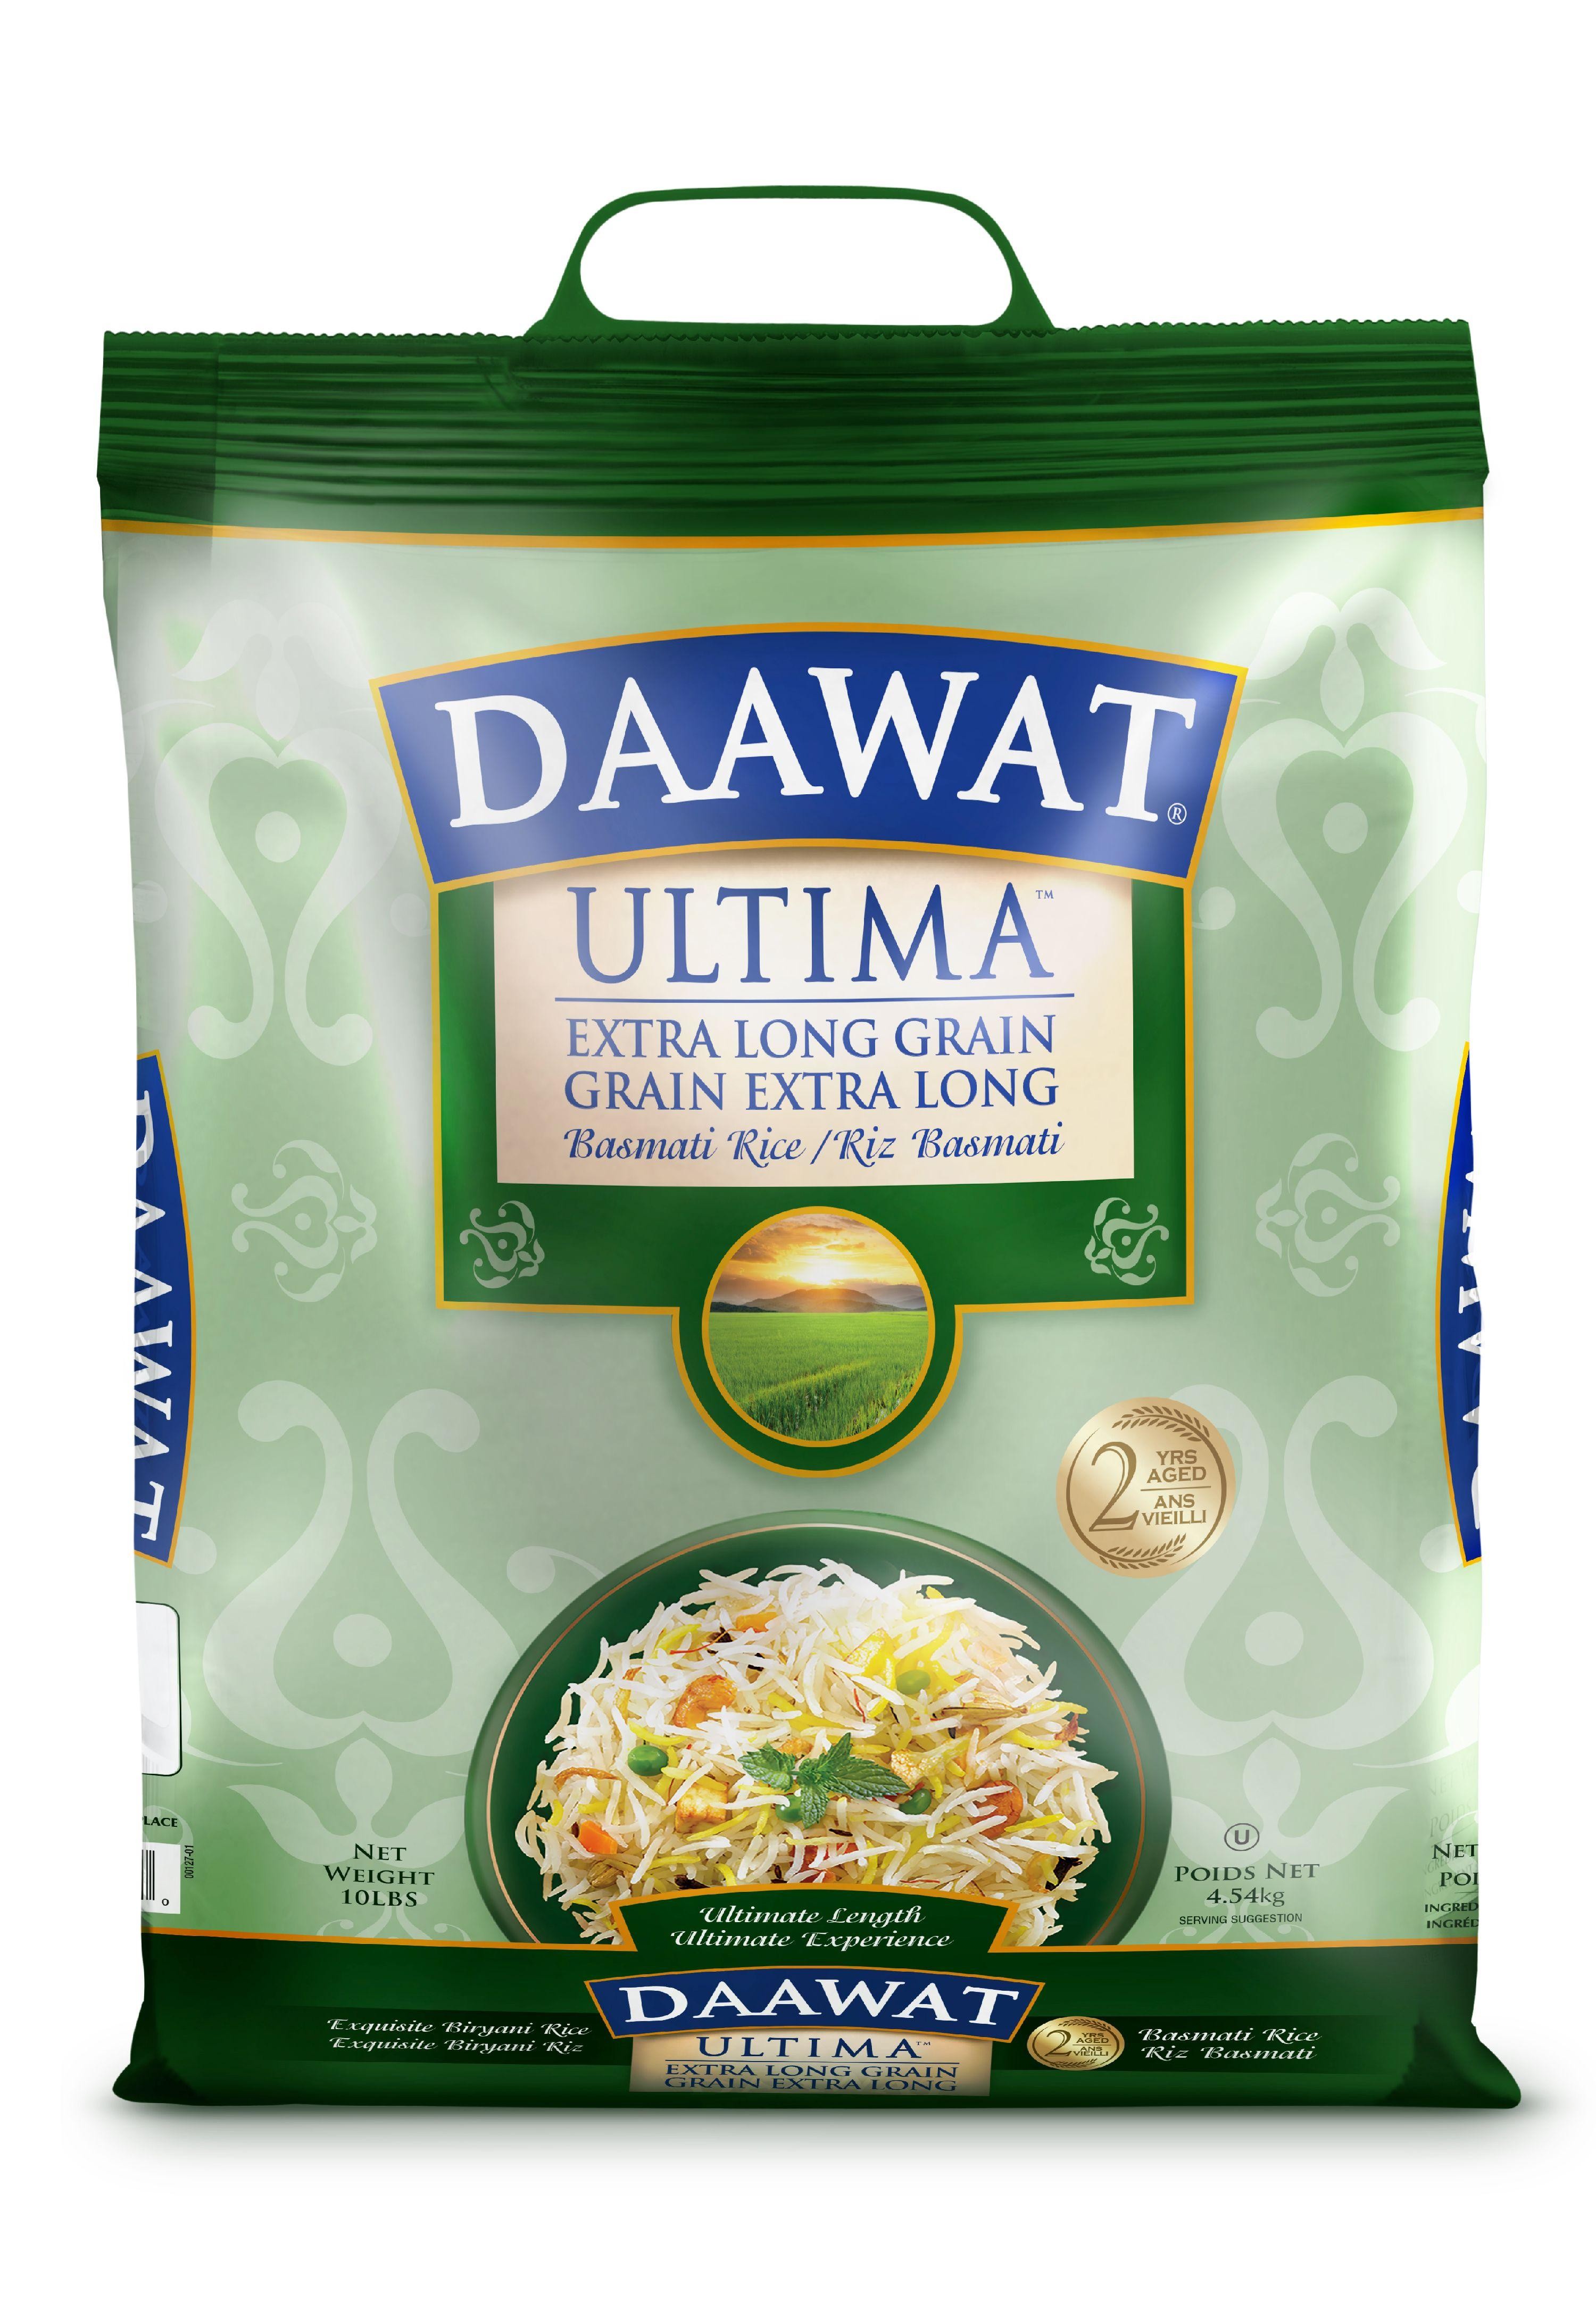 Daawat Ultima Extra Long Grain Basmati Rice  2-Years Aged  10lbs